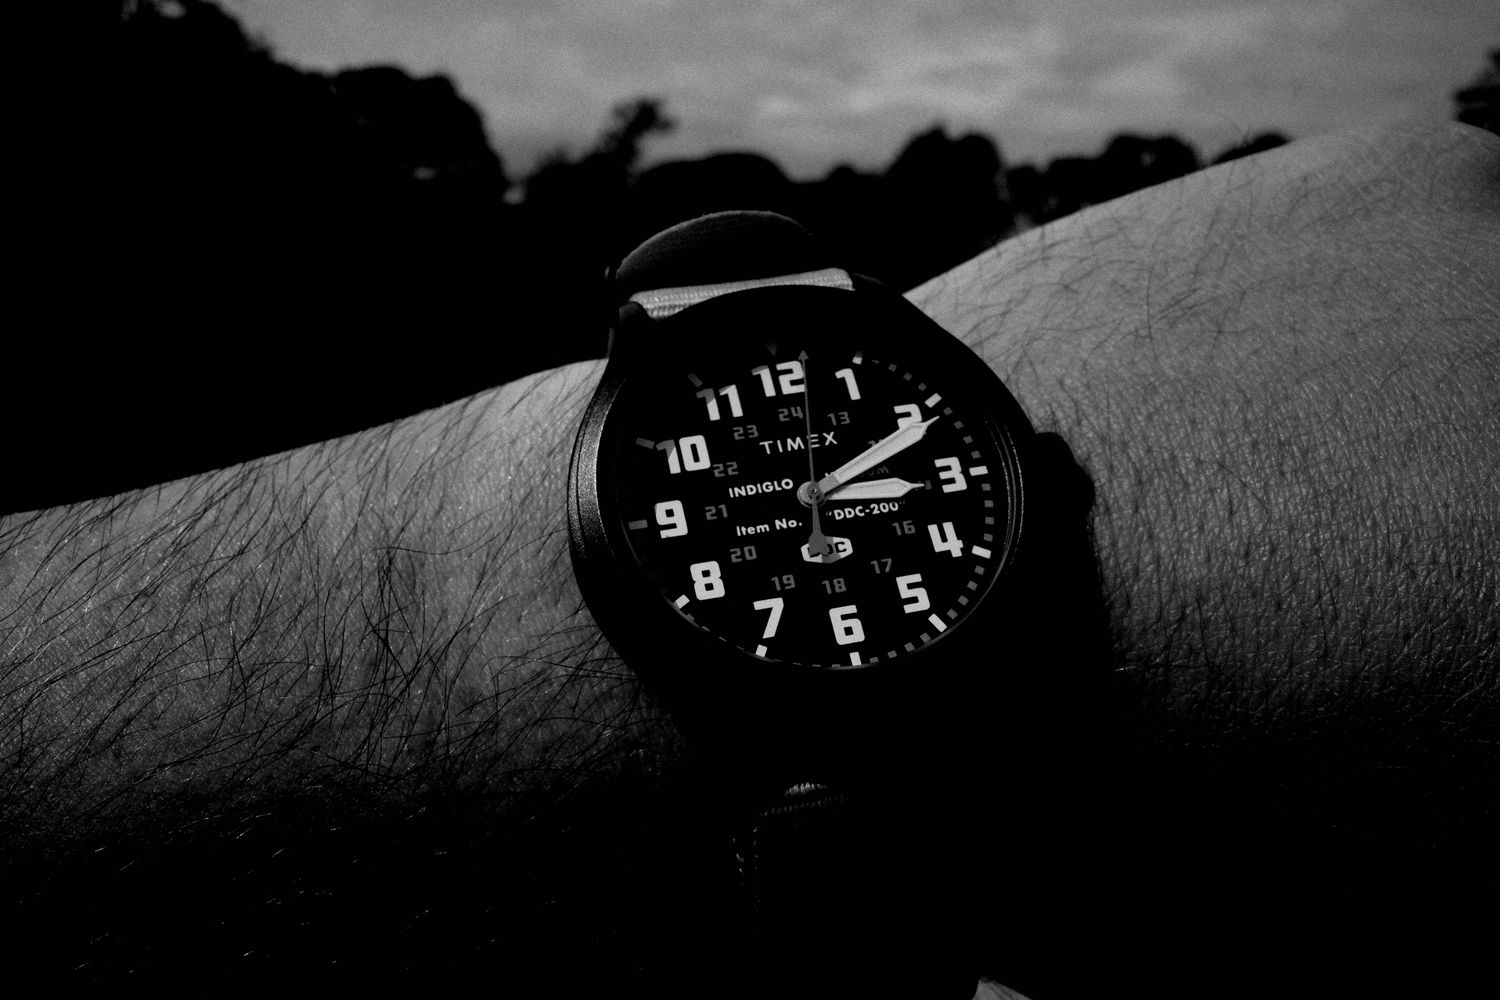 A Timex watch on a wrist